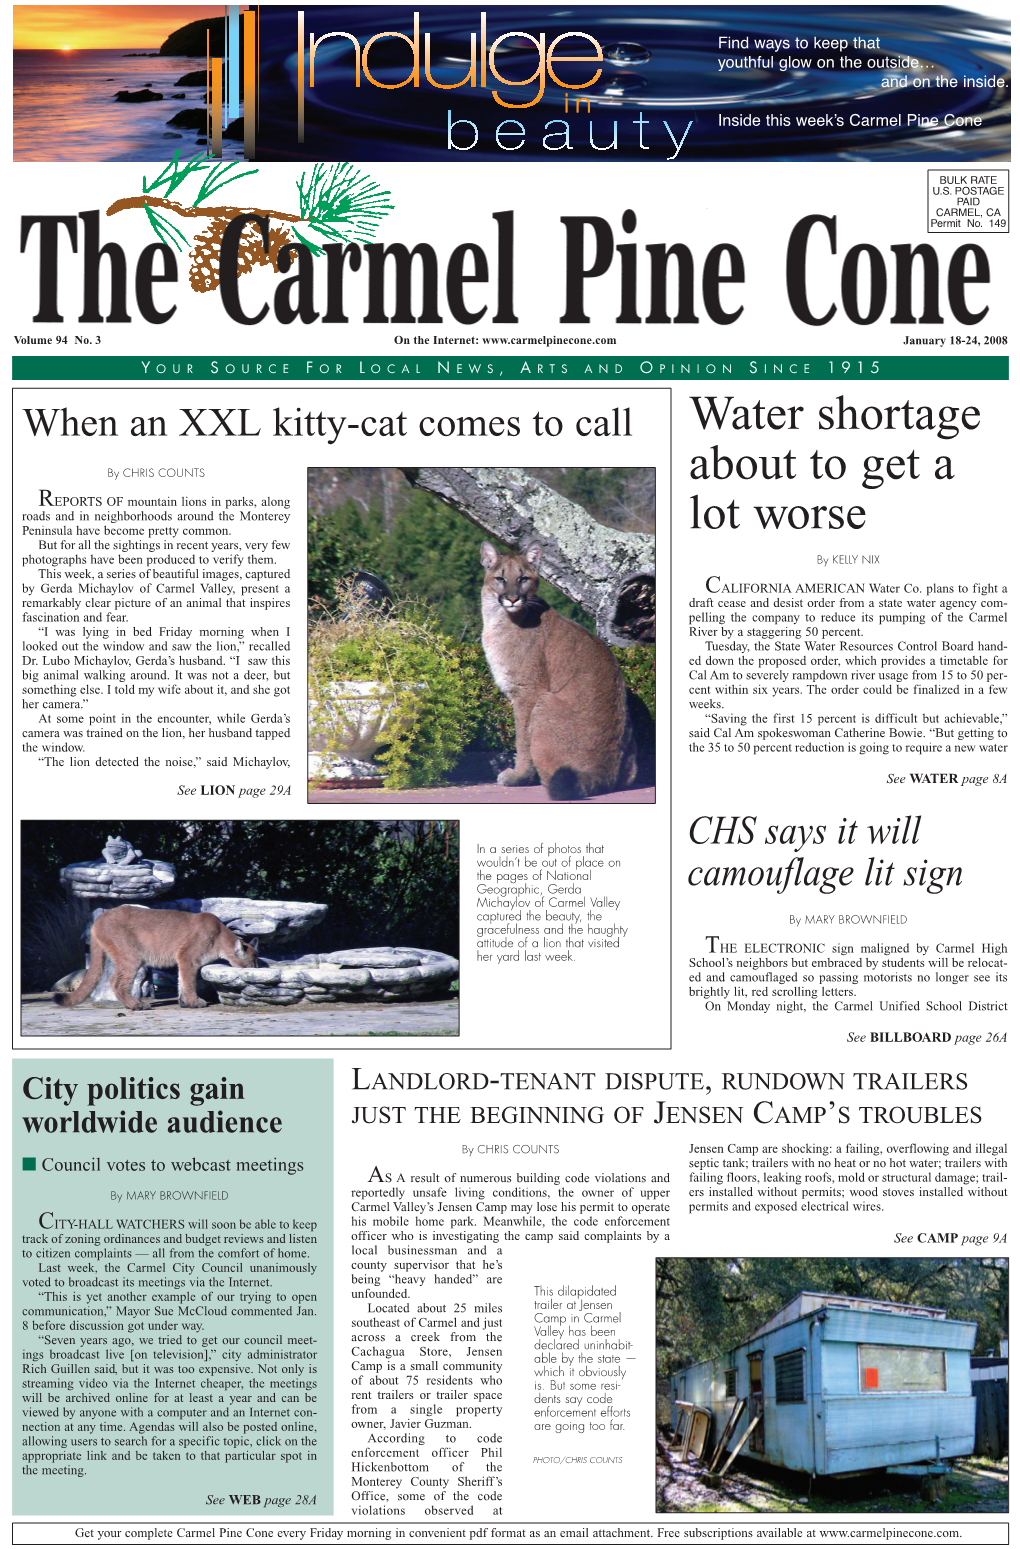 Carmel Pine Cone, January 18, 2008 (Main News)